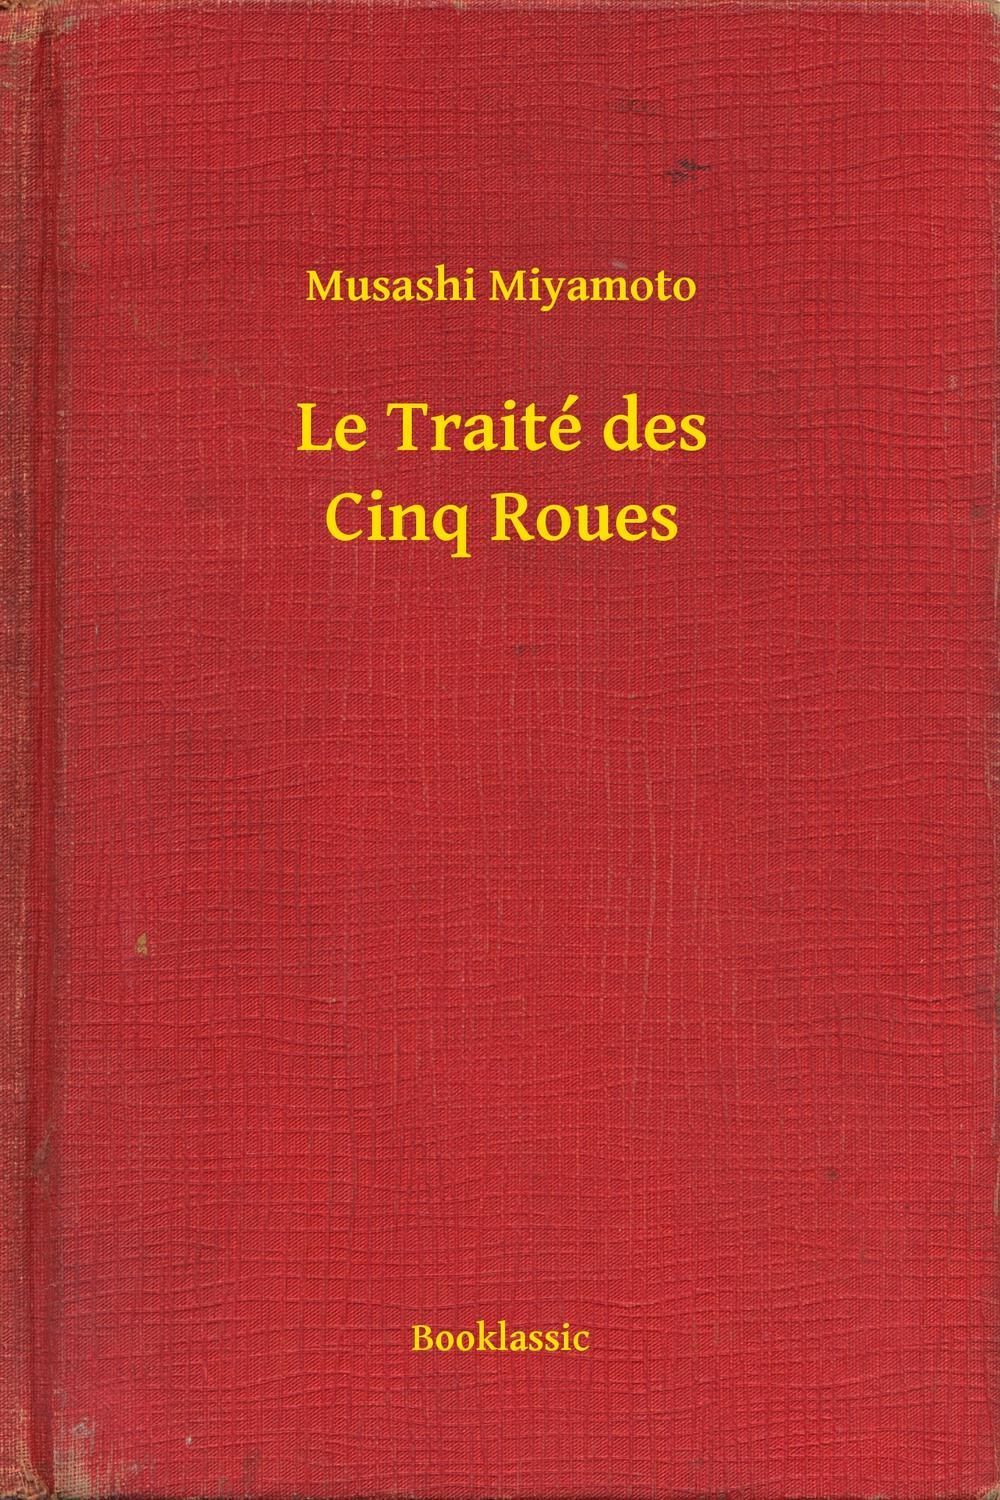 PDF] Le Traité des Cinq Roues by Musashi Miyamoto eBook